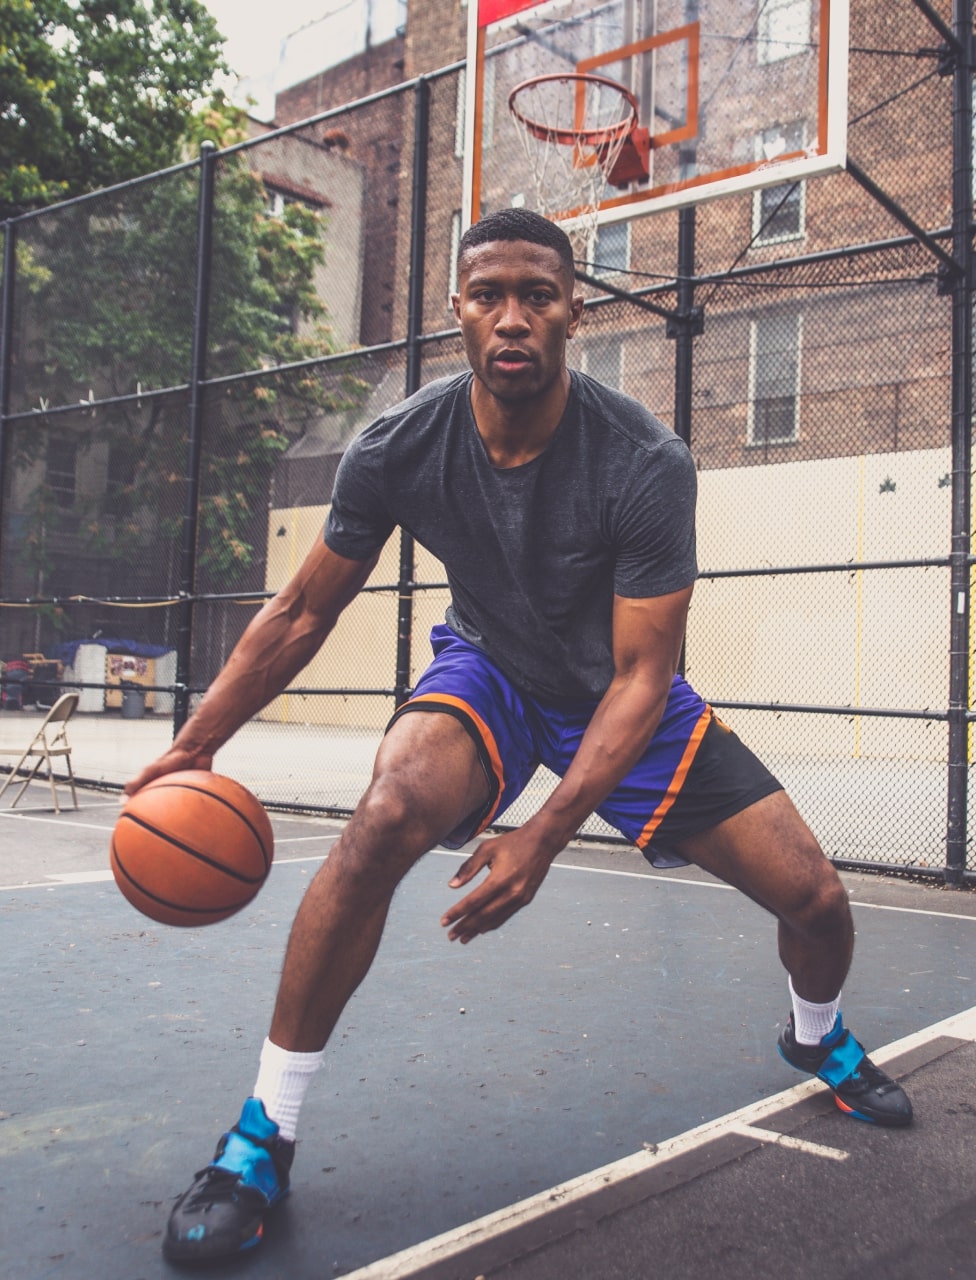 An image of a man playing basketball, while wearing custom basketball shorts.